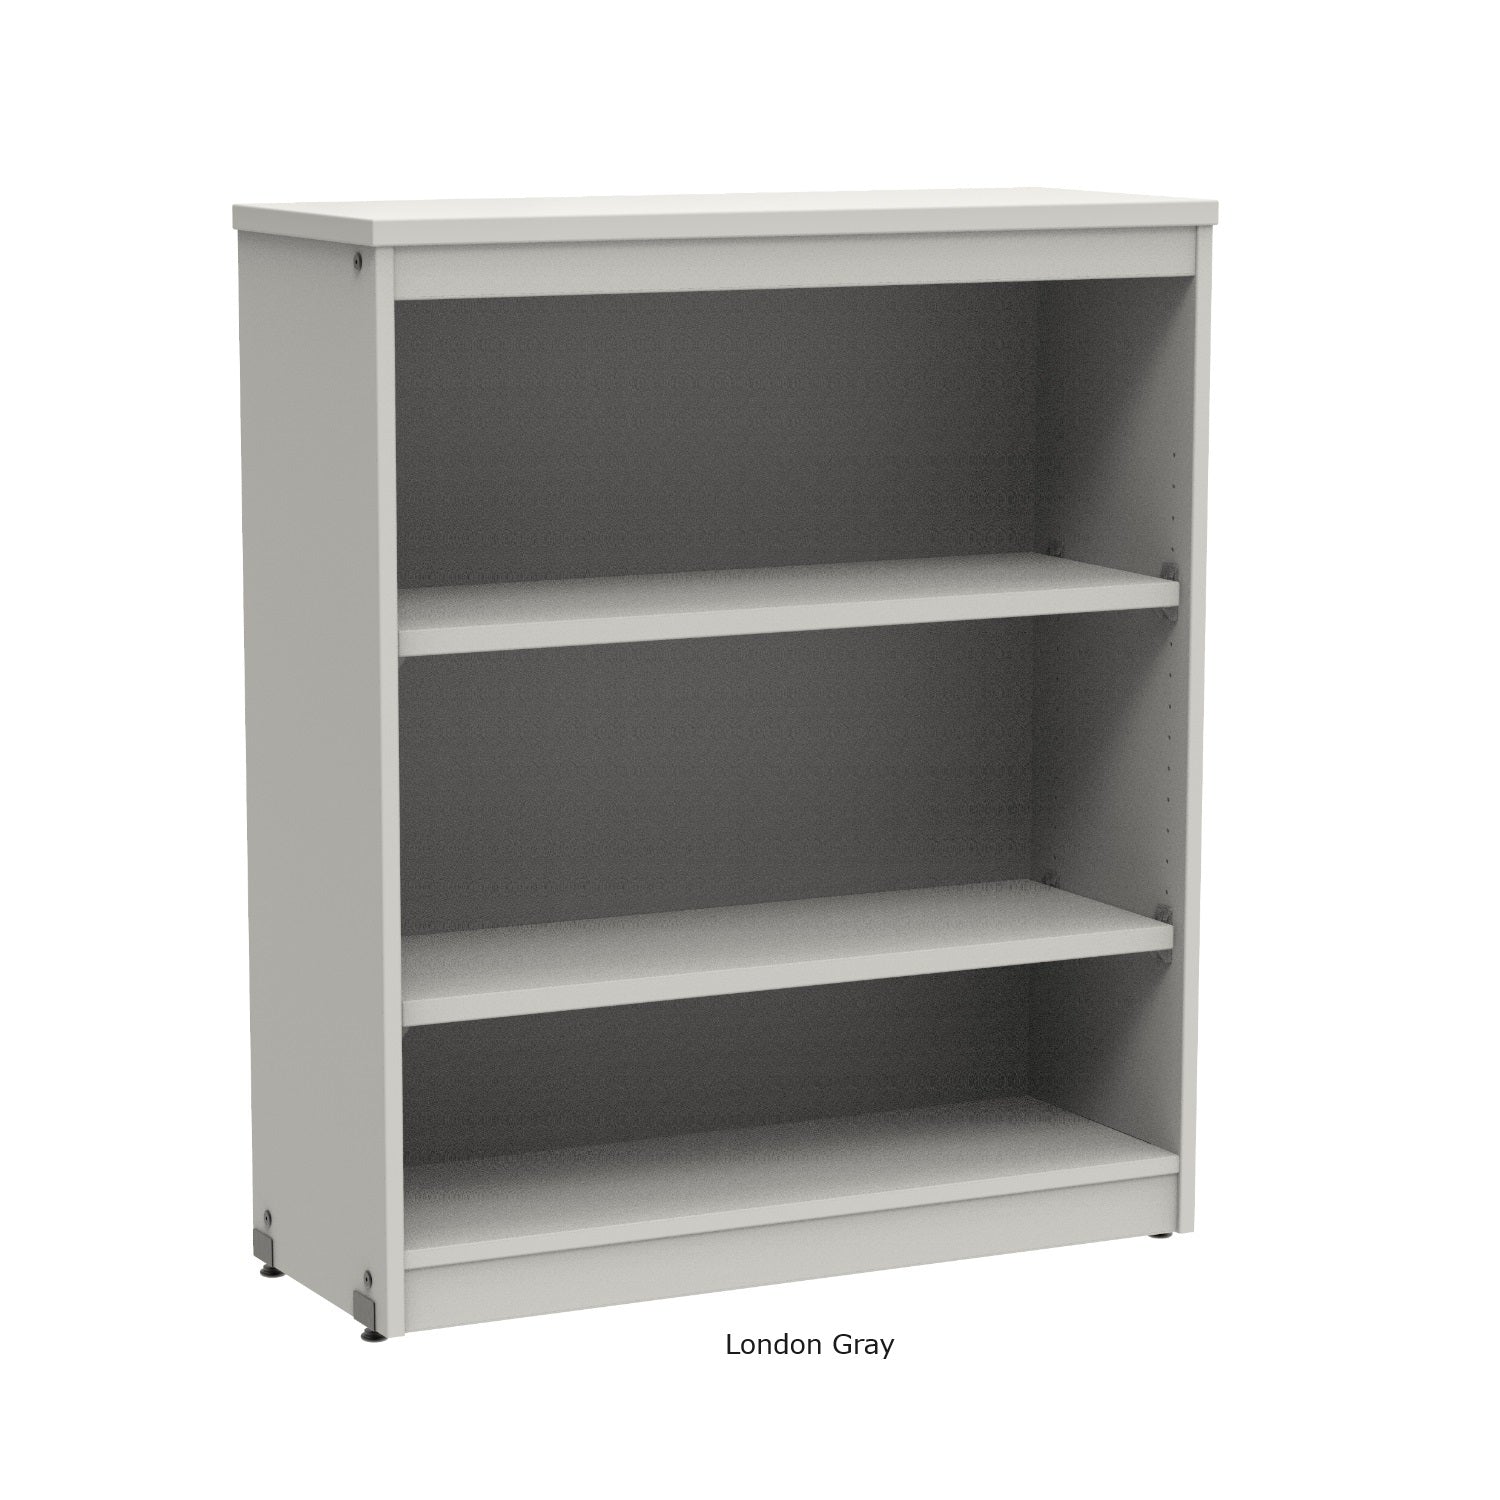 4-Shelf Bookcase with 2 Adjustable Shelves, 42" High